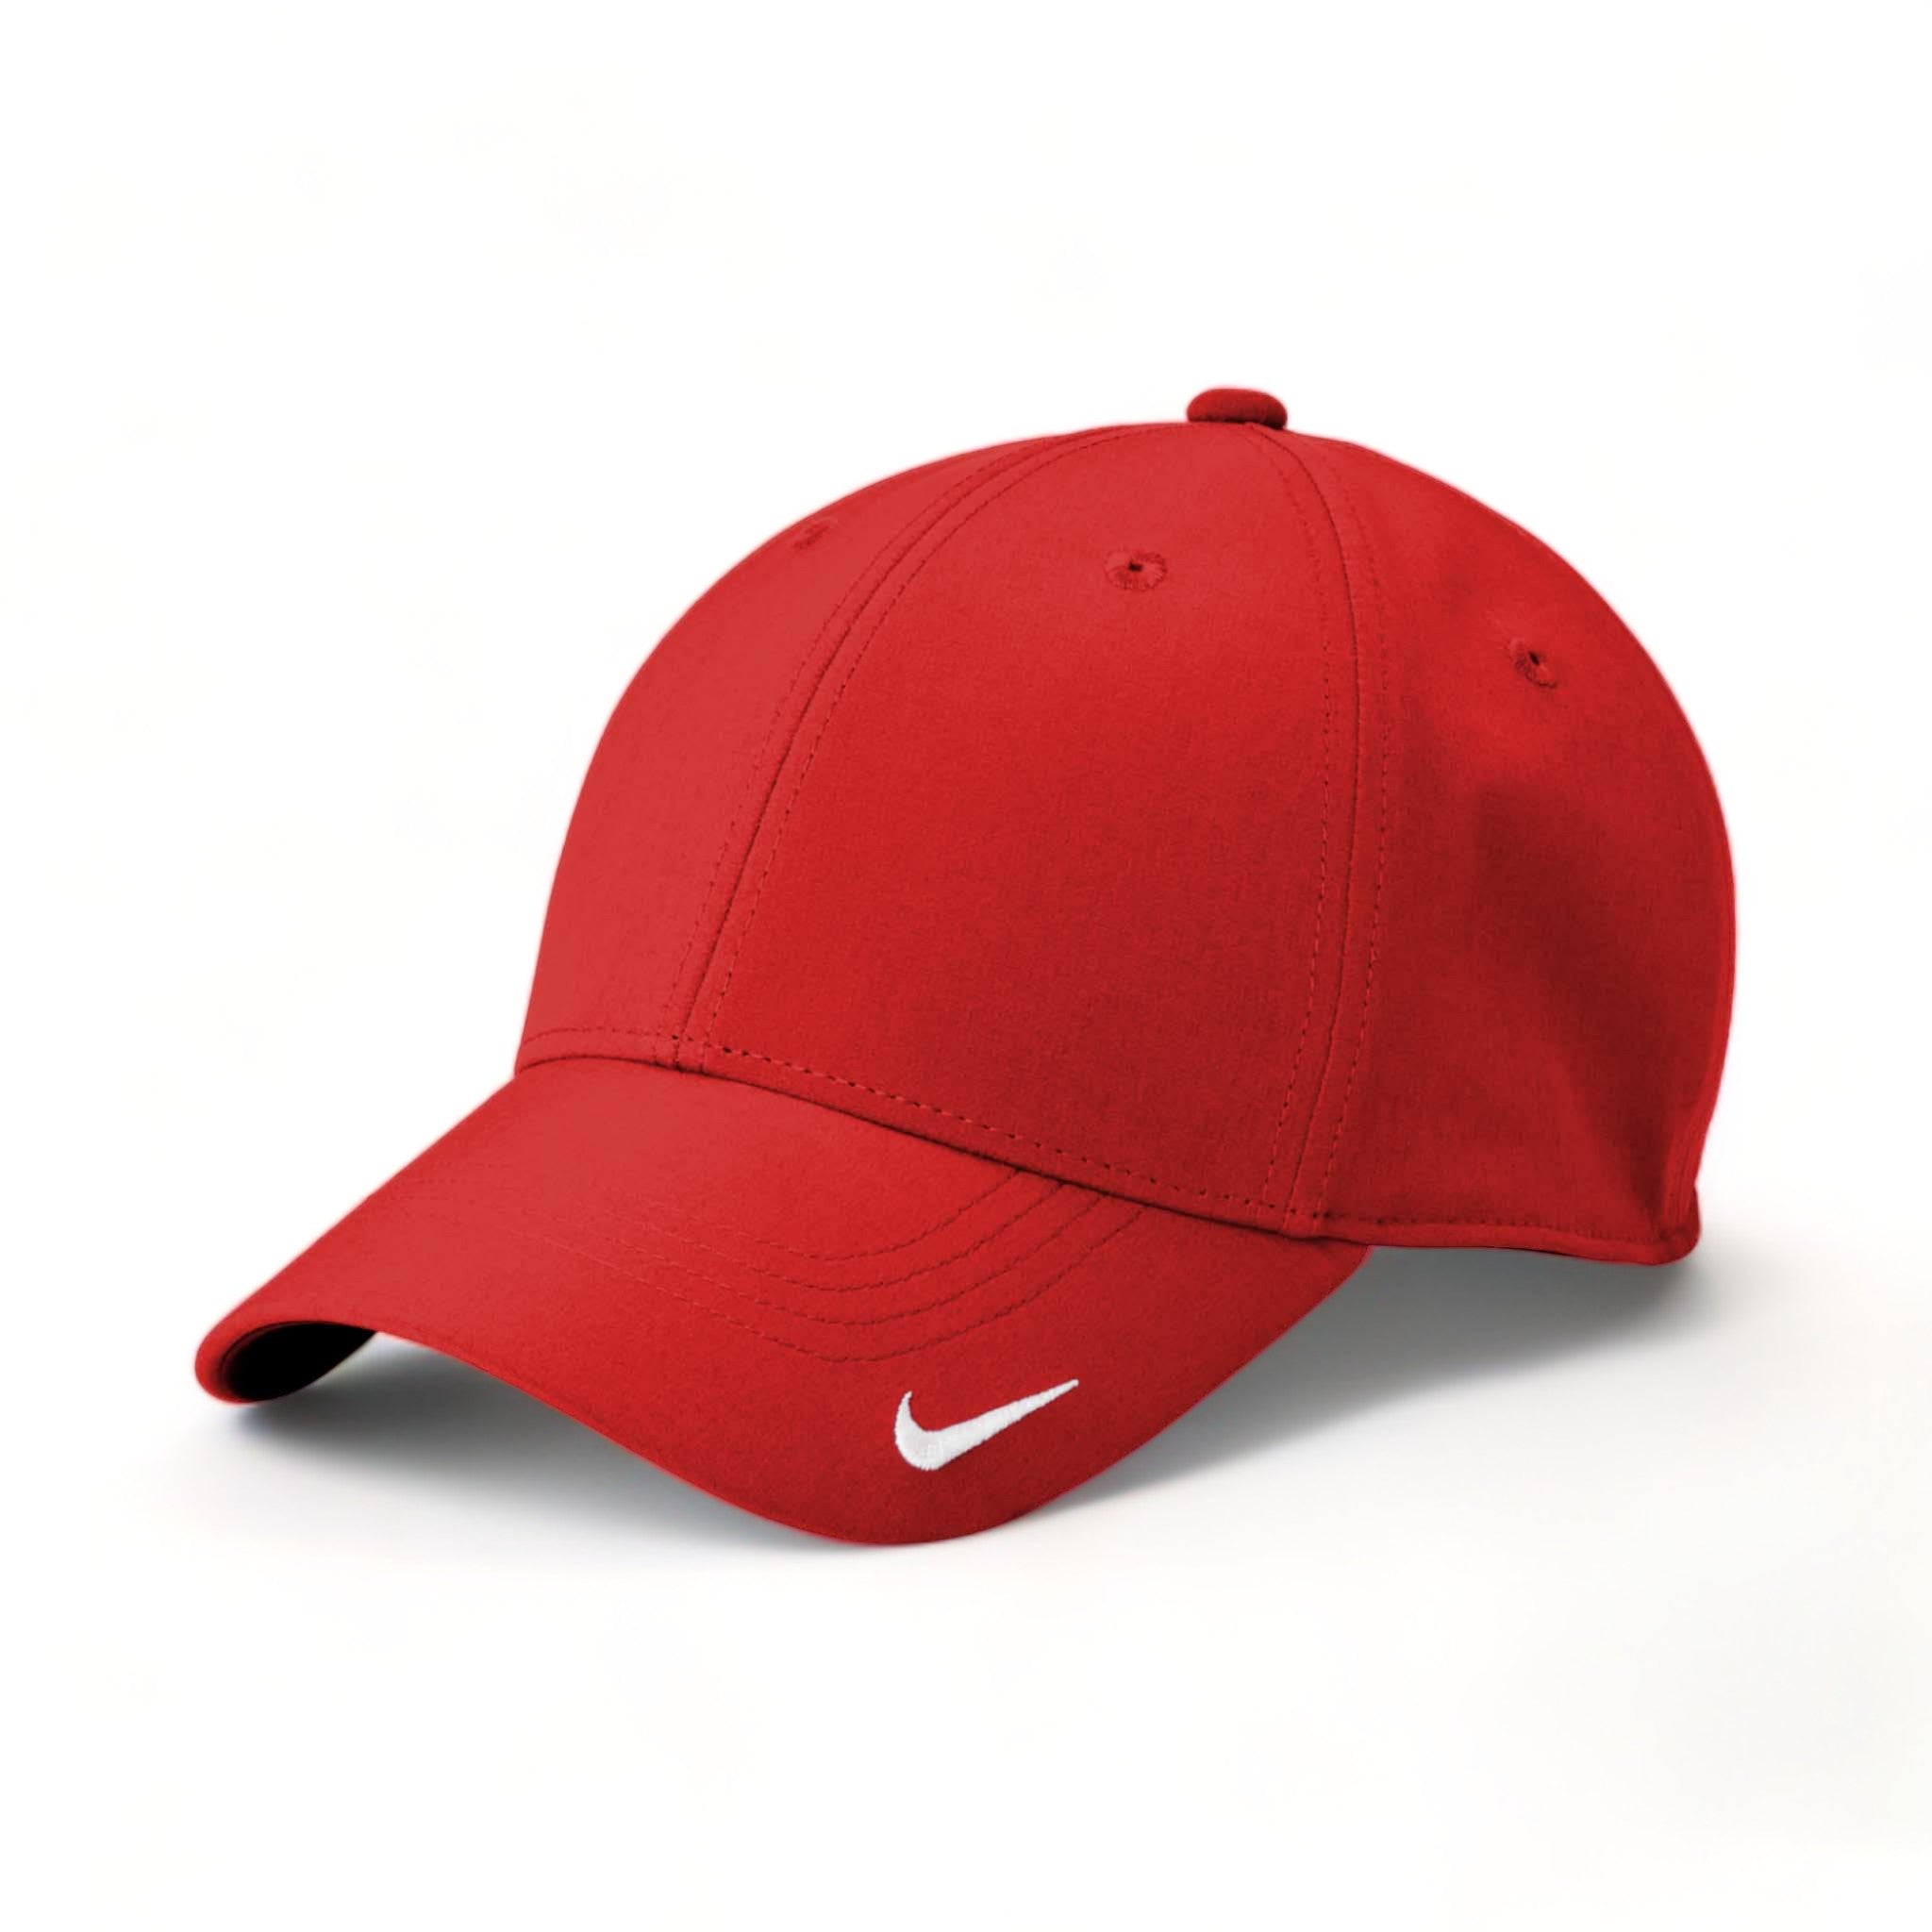 Side view of Nike NKFB6447 custom hat in university red